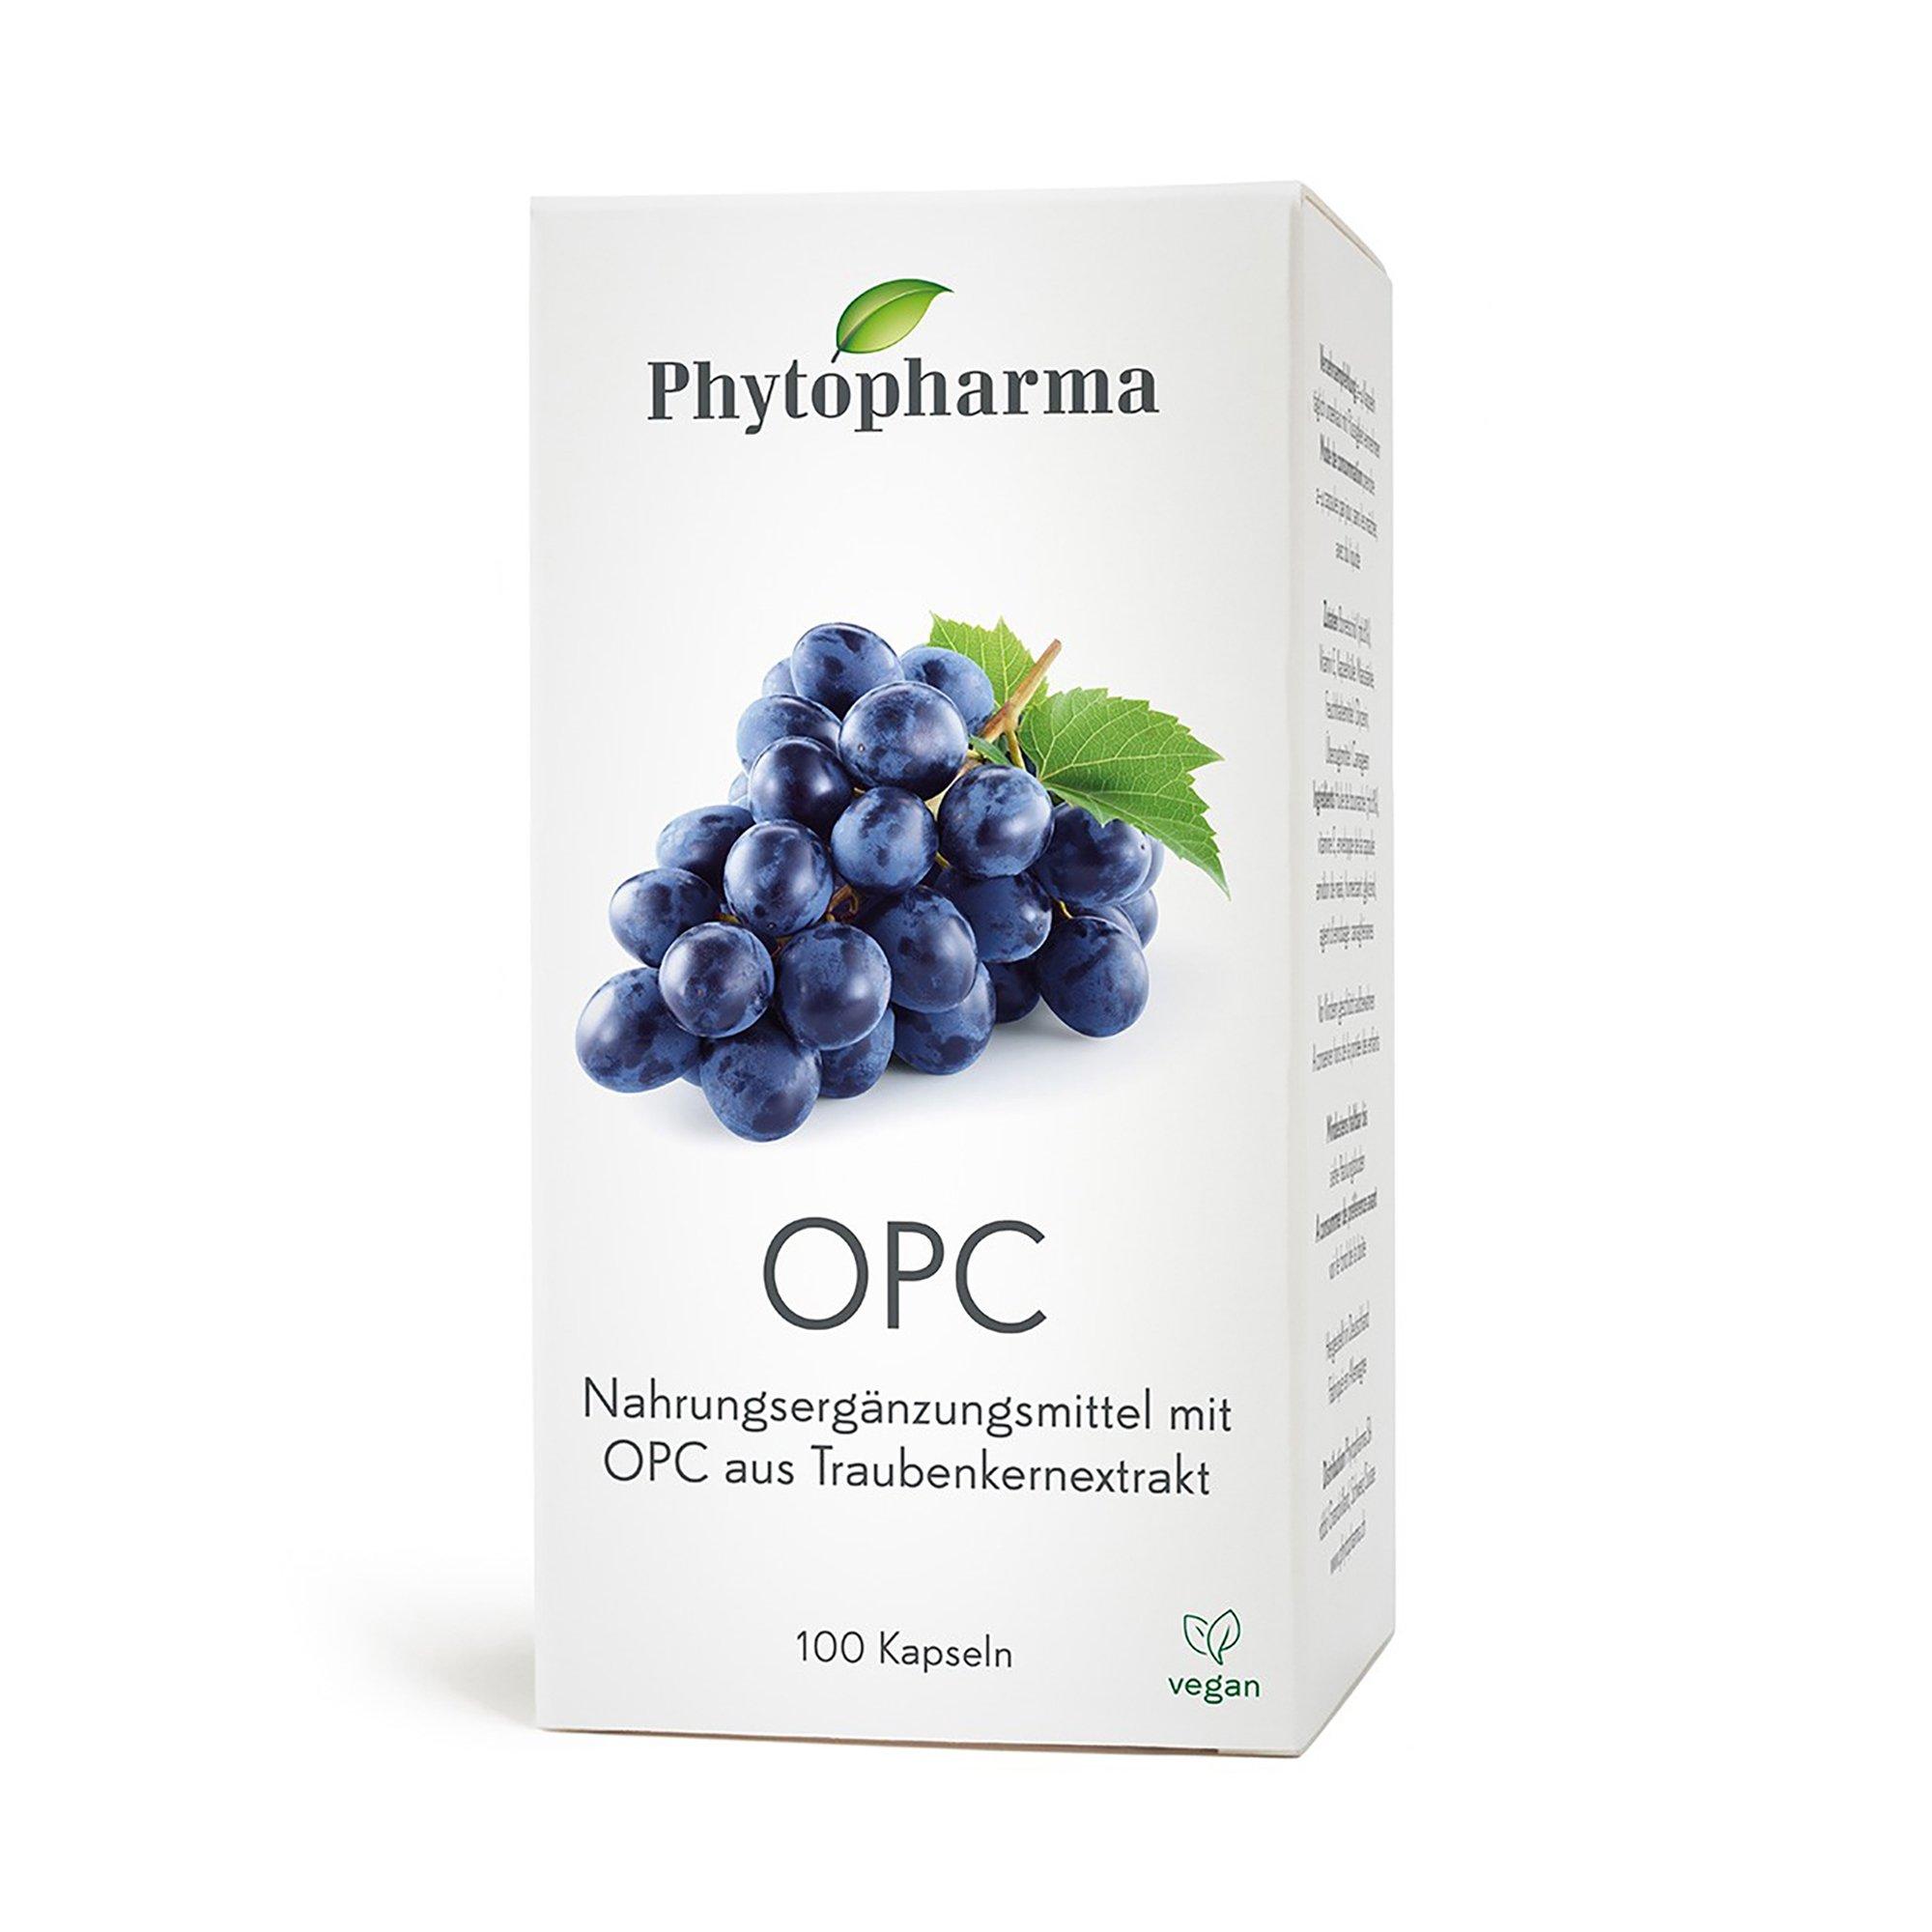 Image of Phytopharma OPC Traubenkernextrakt Vegan Nahrungsergänzungsmittel mit OPC aus Traubenkernextrakt - 100Stück